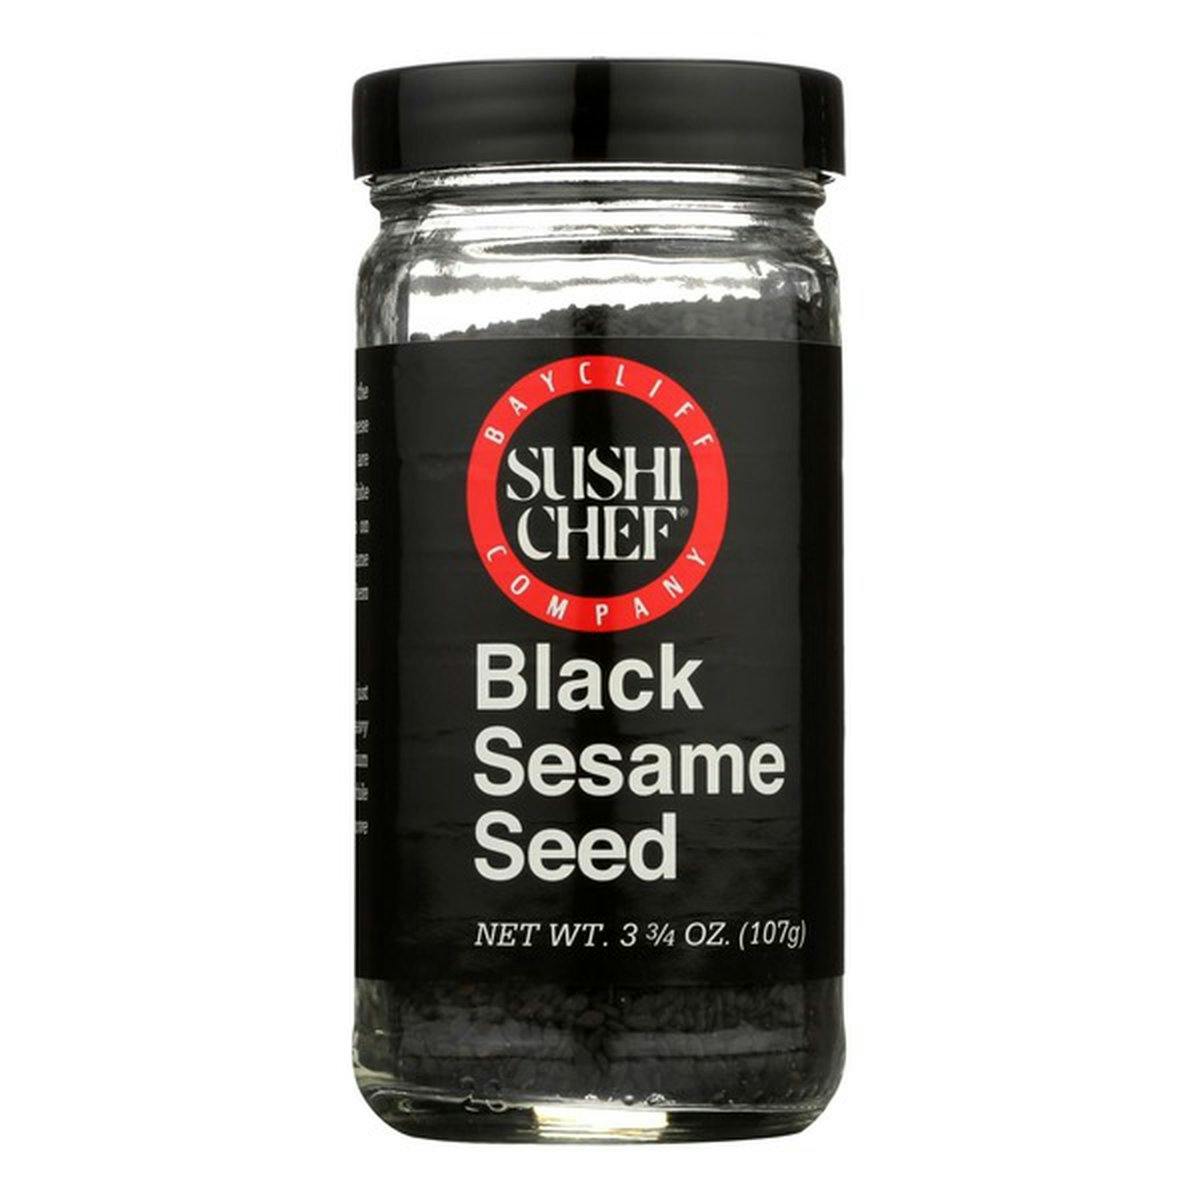 Spiceology black sesame seeds